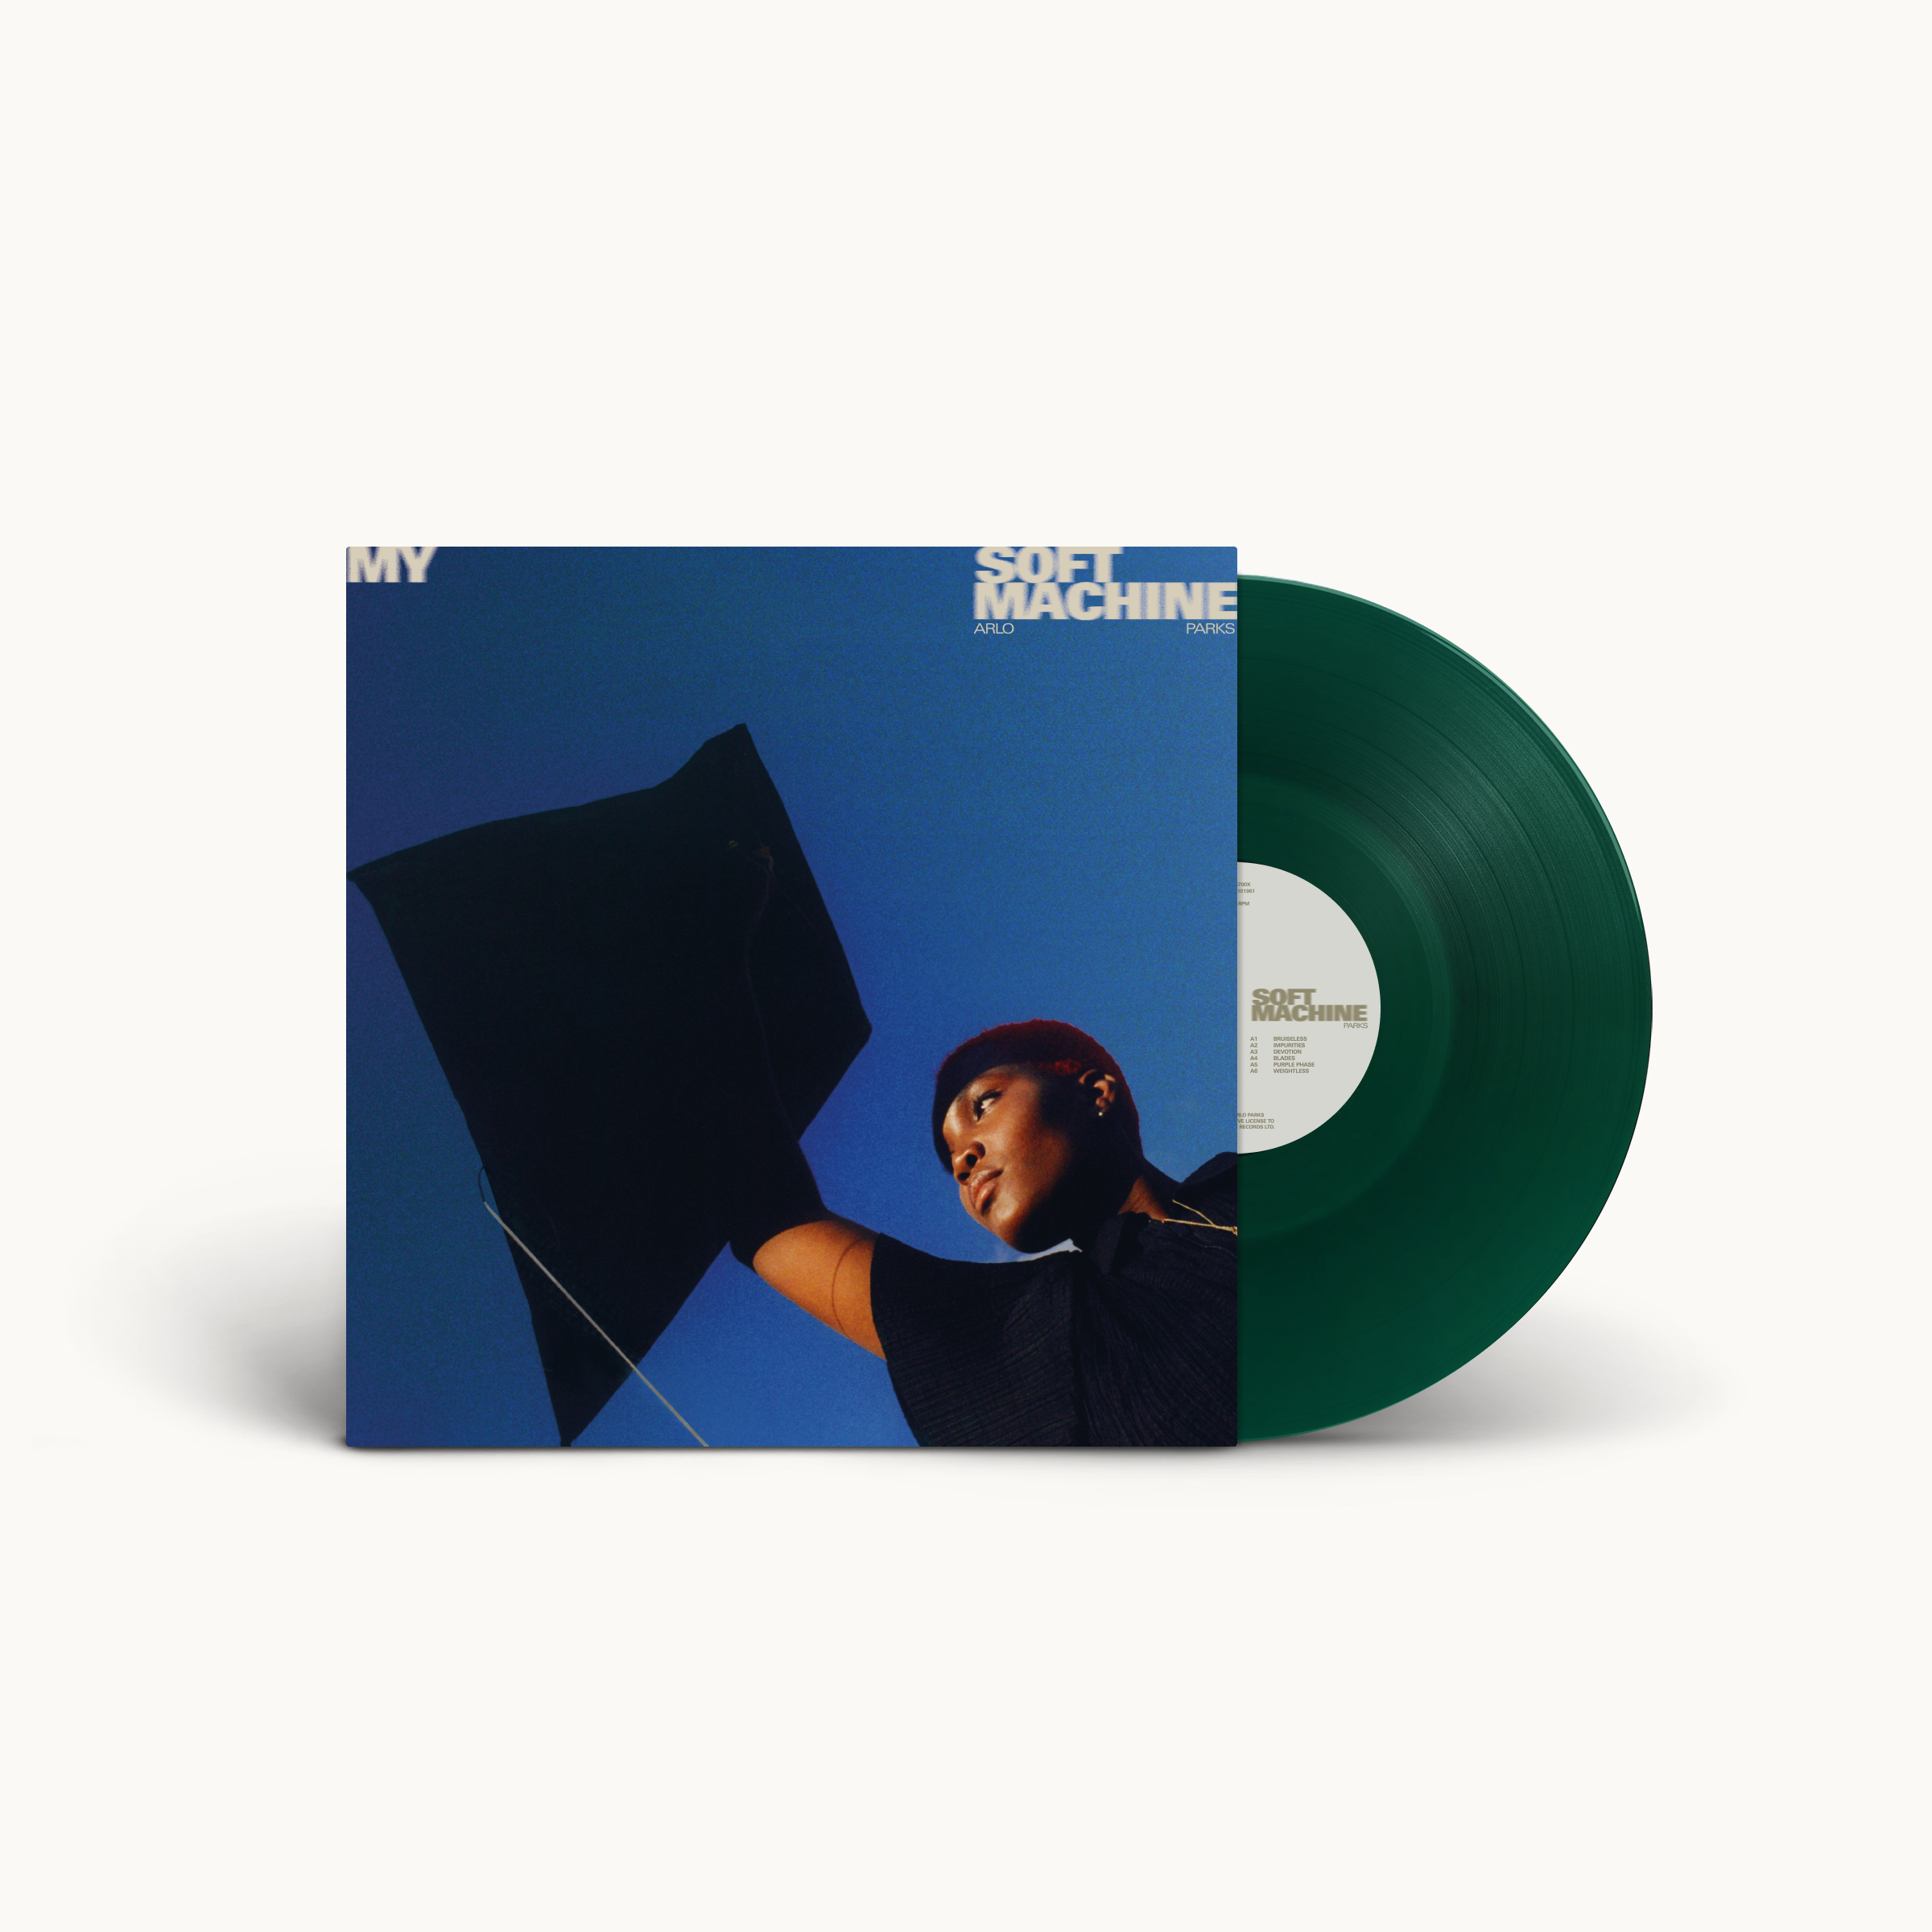 My Soft Machine: Vinyl LP + Exclusive Signed Insert